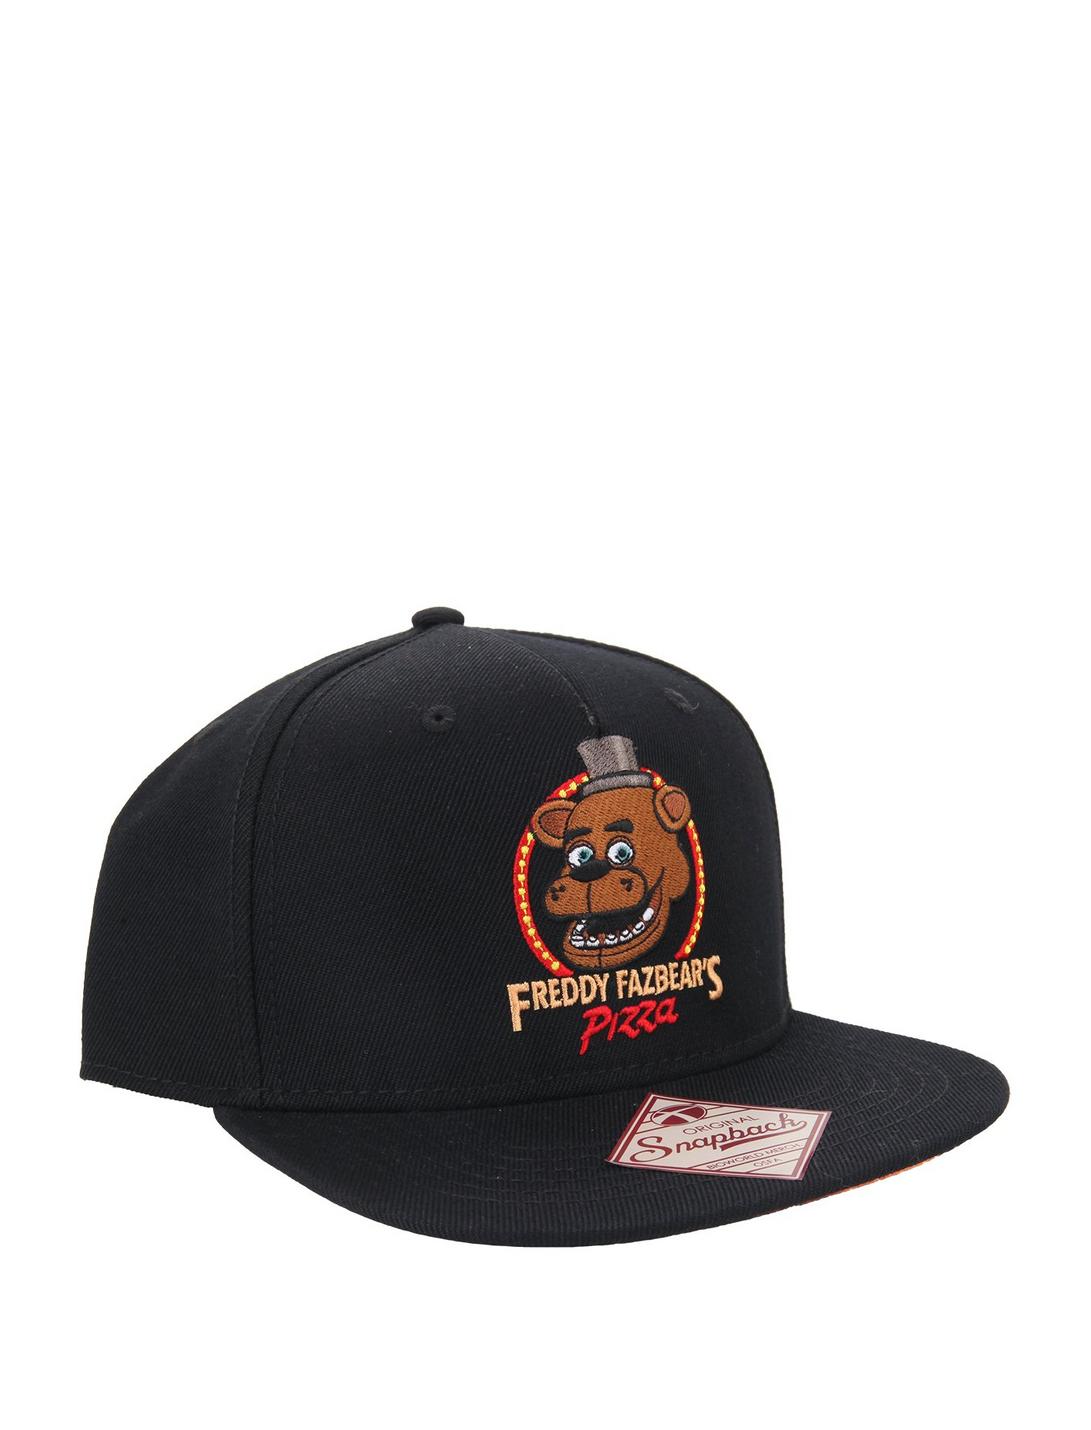 Five Nights At Freddy's Freddy Fazbear’s Pizza Snapback Hat, , hi-res